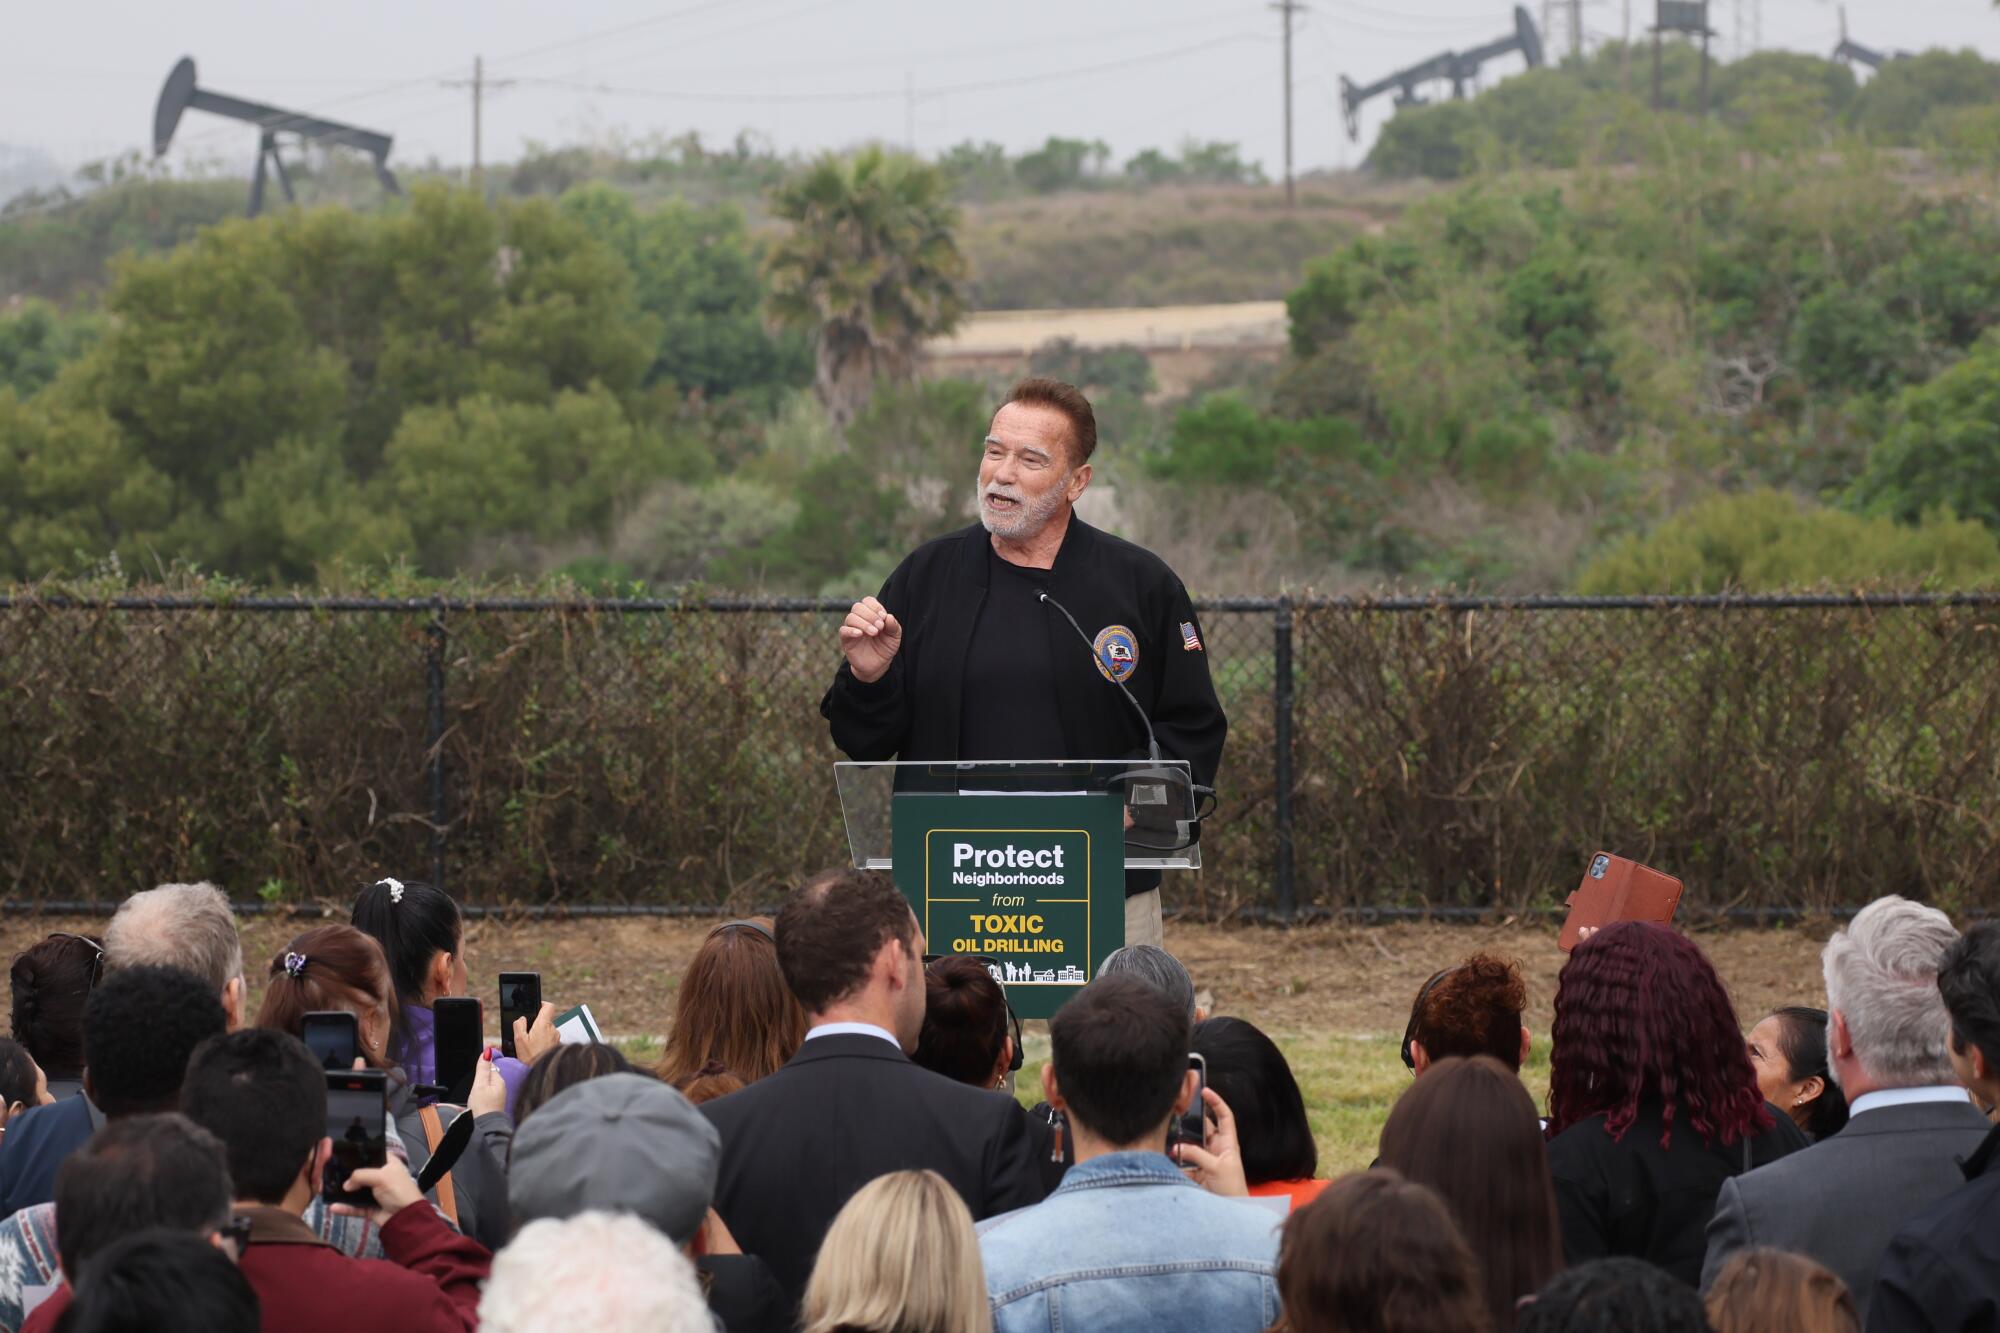 Former California Gov. Arnold Schwarzenegger speaks outdoors while oil pumpjacks are in the background.